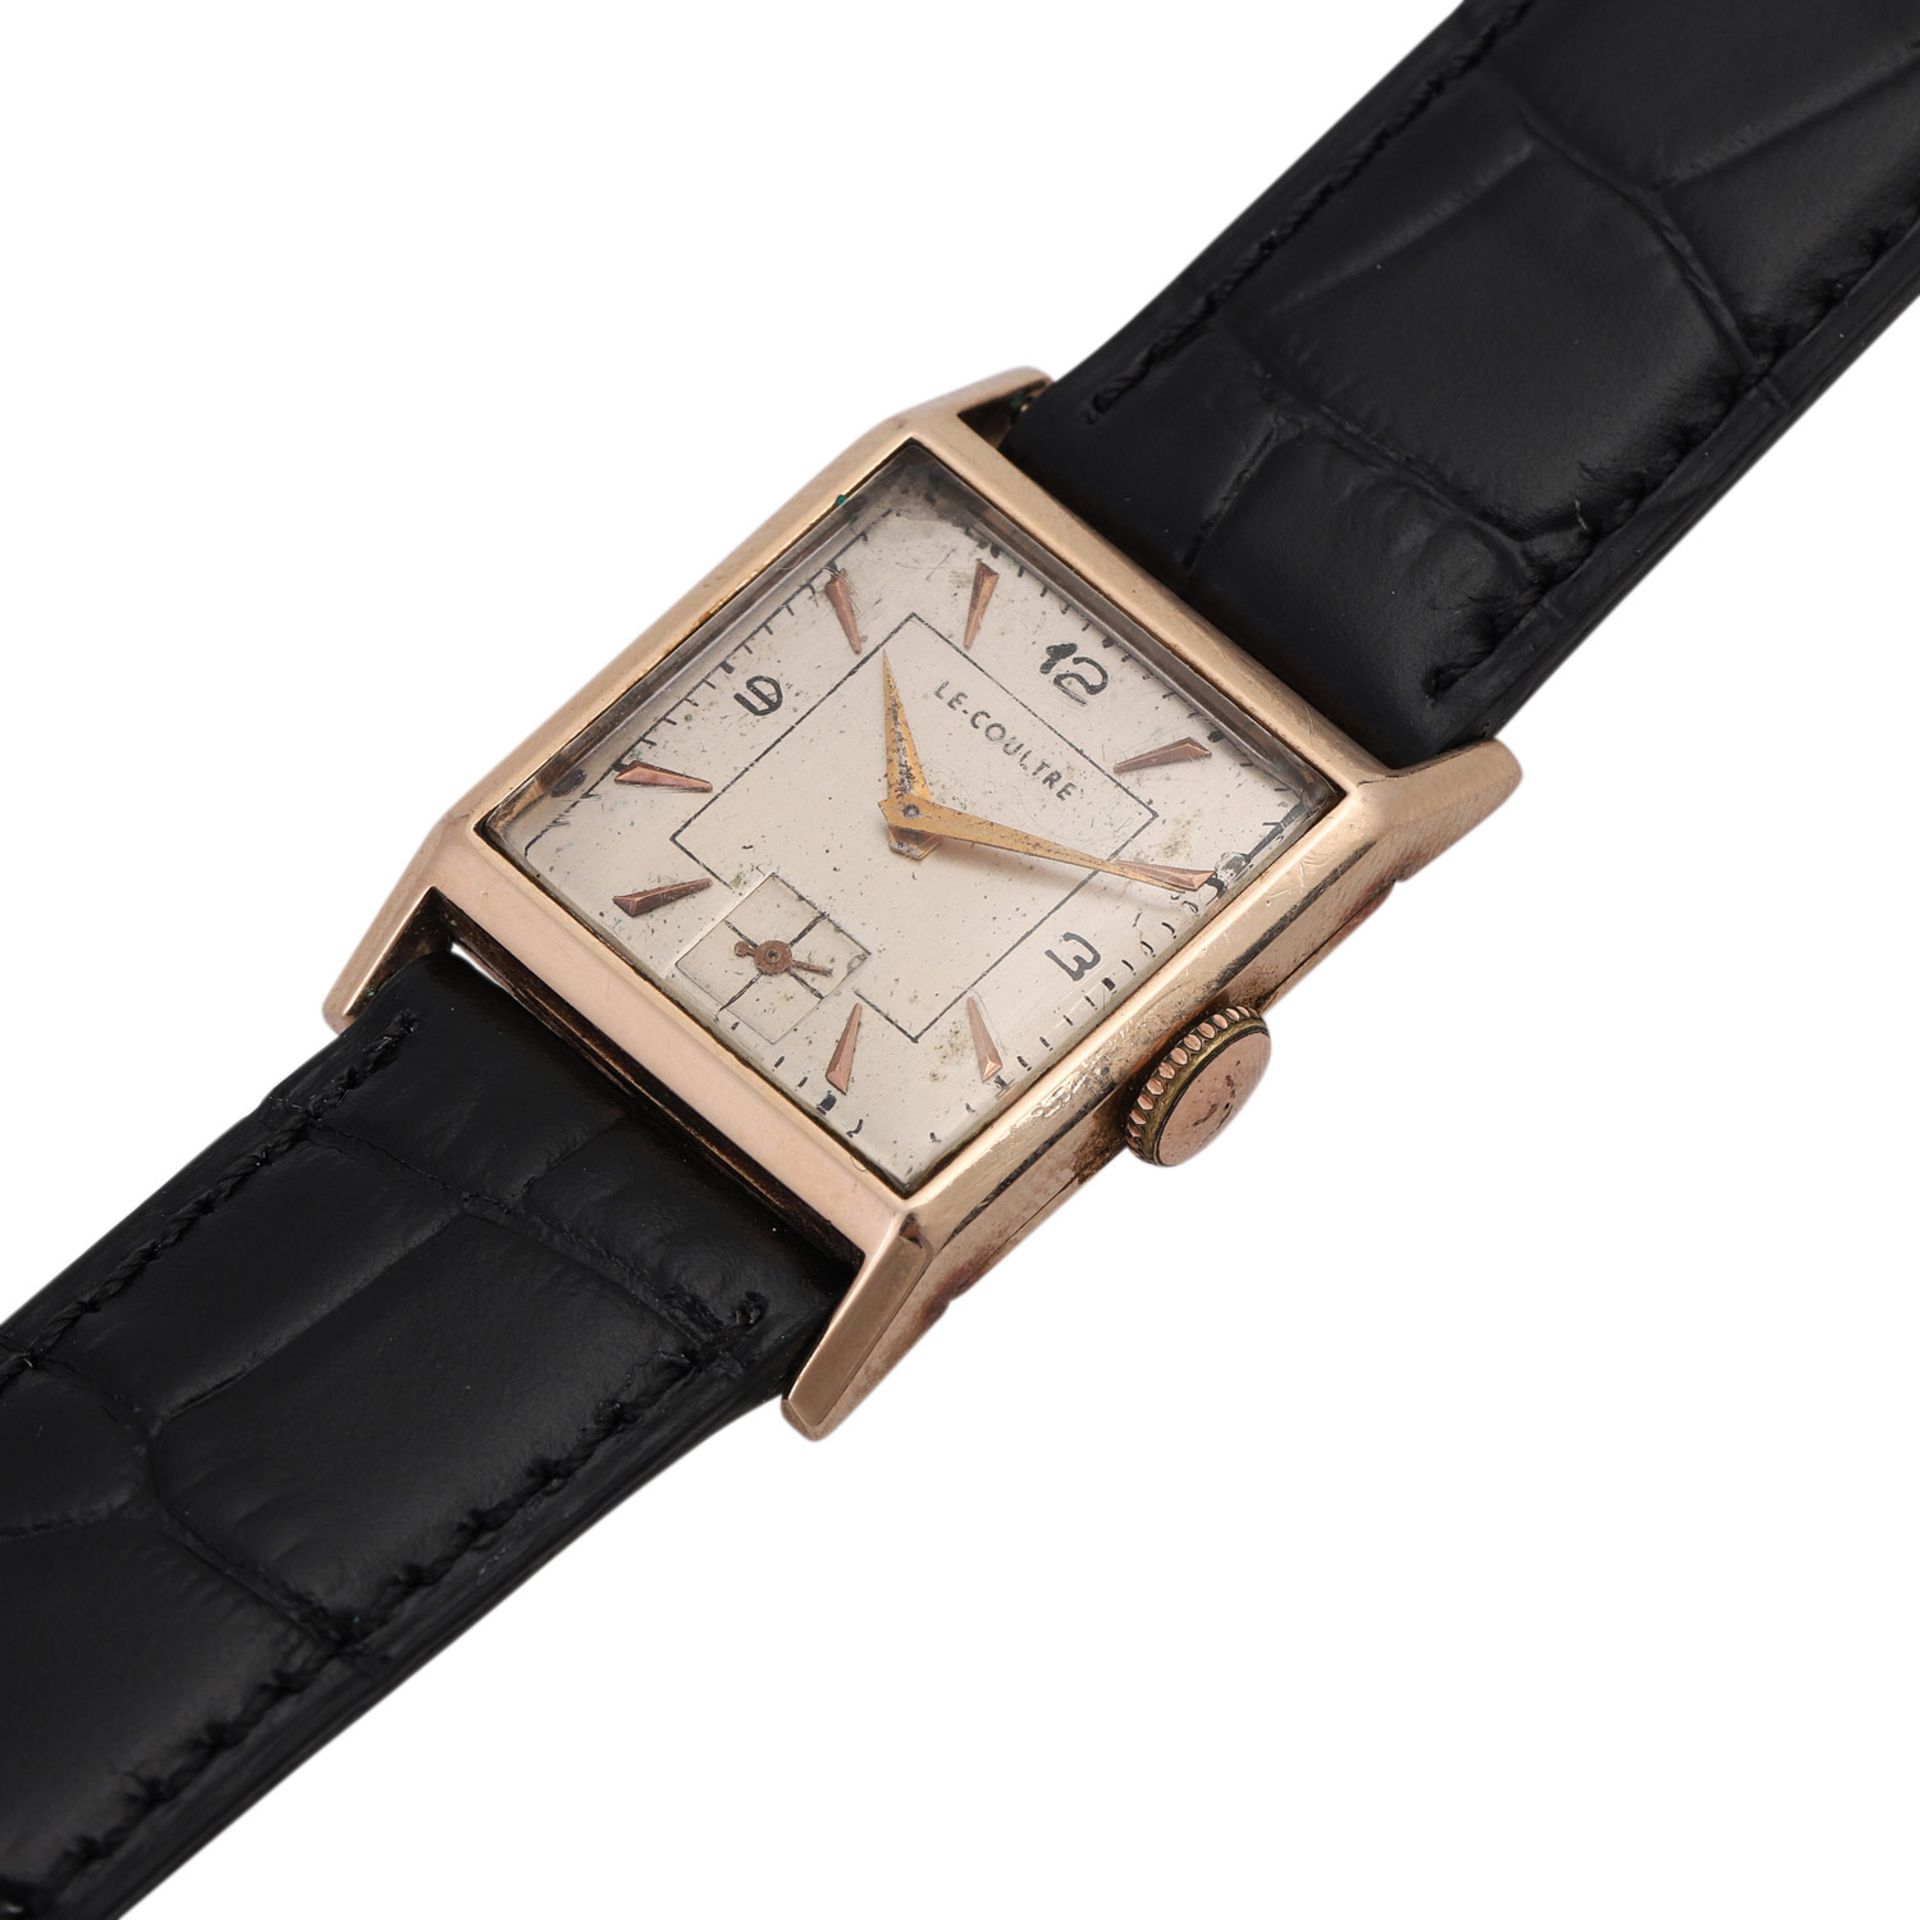 LE COULTRE Vintage Armbanduhr, ca. 1940/50er Jahre. Gold 14K.Handaufzugwerk, Cal. 428. Werk-Nr. - Bild 4 aus 4